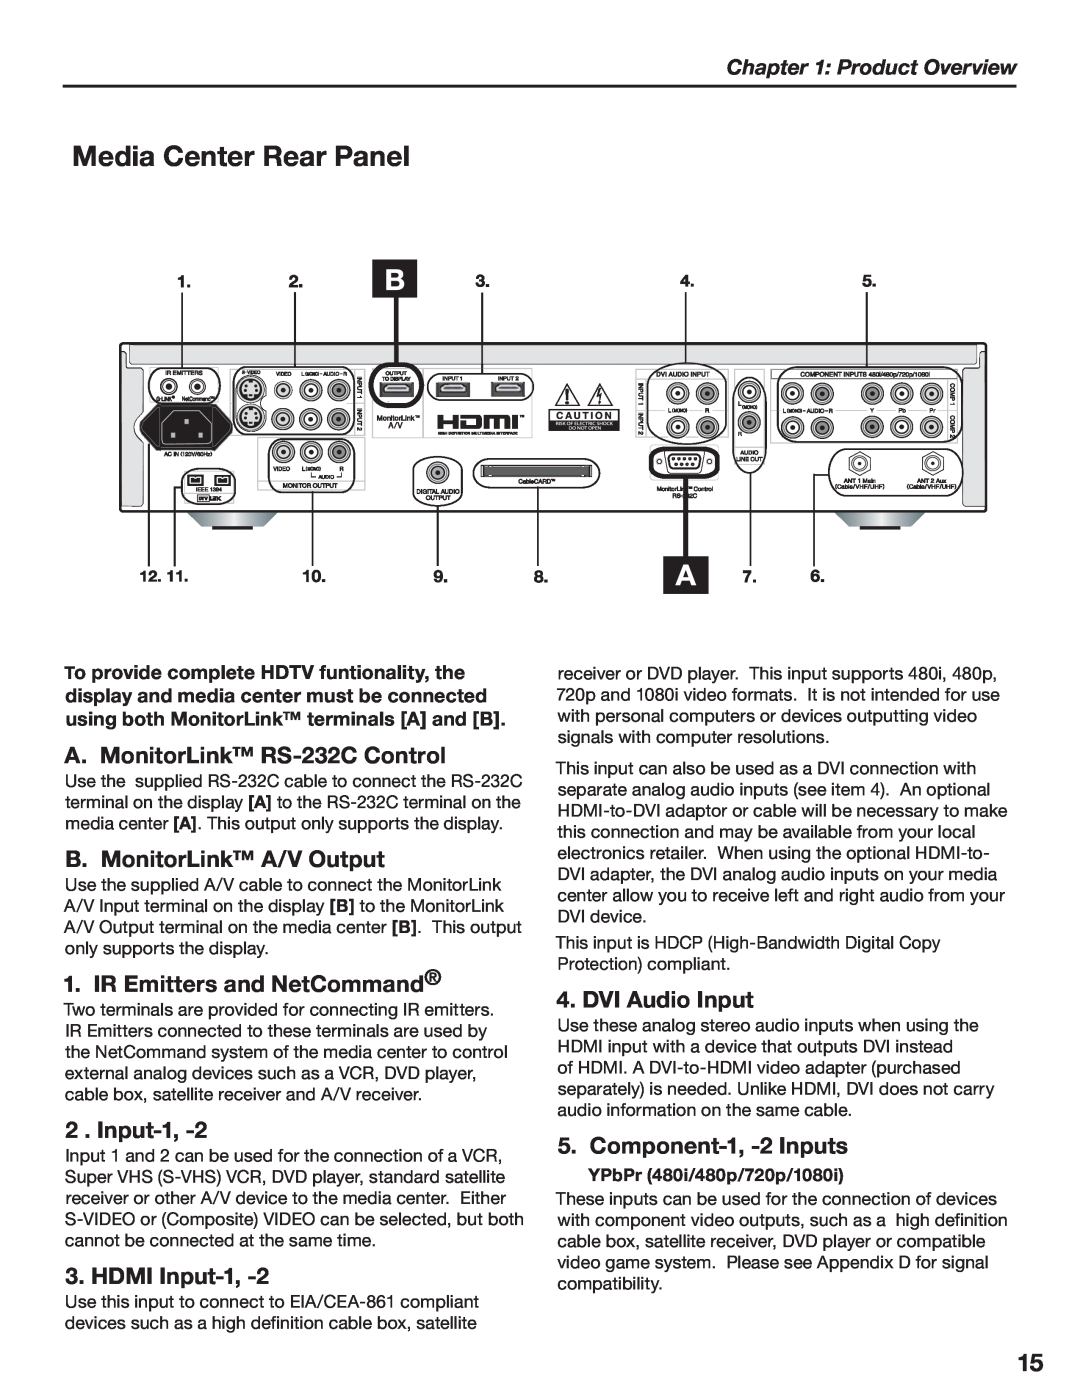 Mitsubishi Electronics LT-3780 Media Center Rear Panel, A. MonitorLink RS-232C Control, B. MonitorLink A/V Output, Input-1 